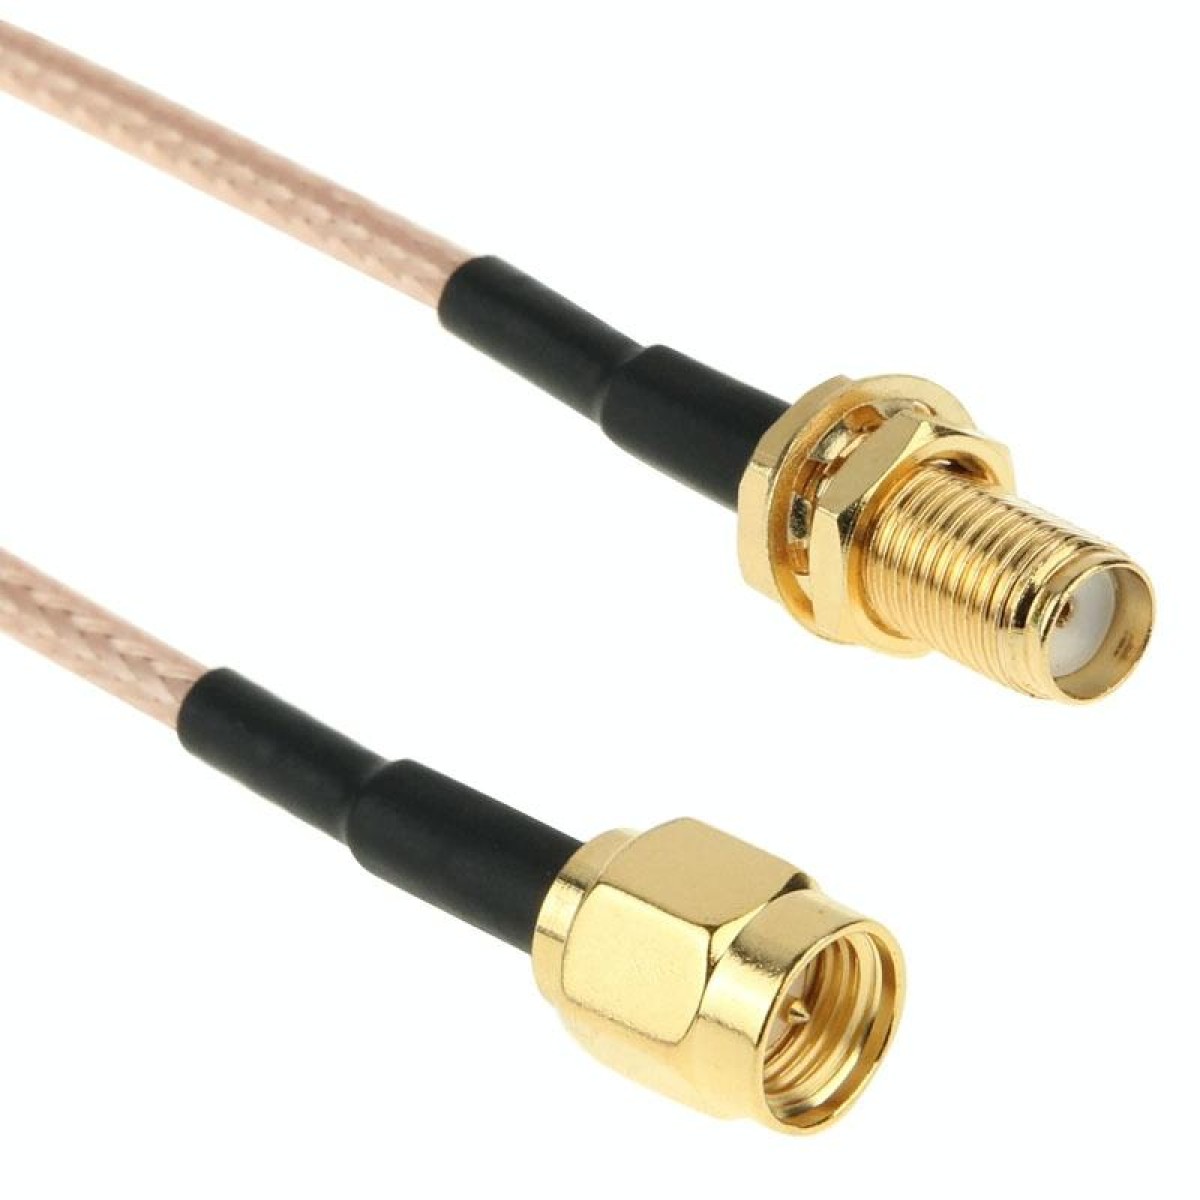 SMA Male to SMA Female Cable, Length: 15cm